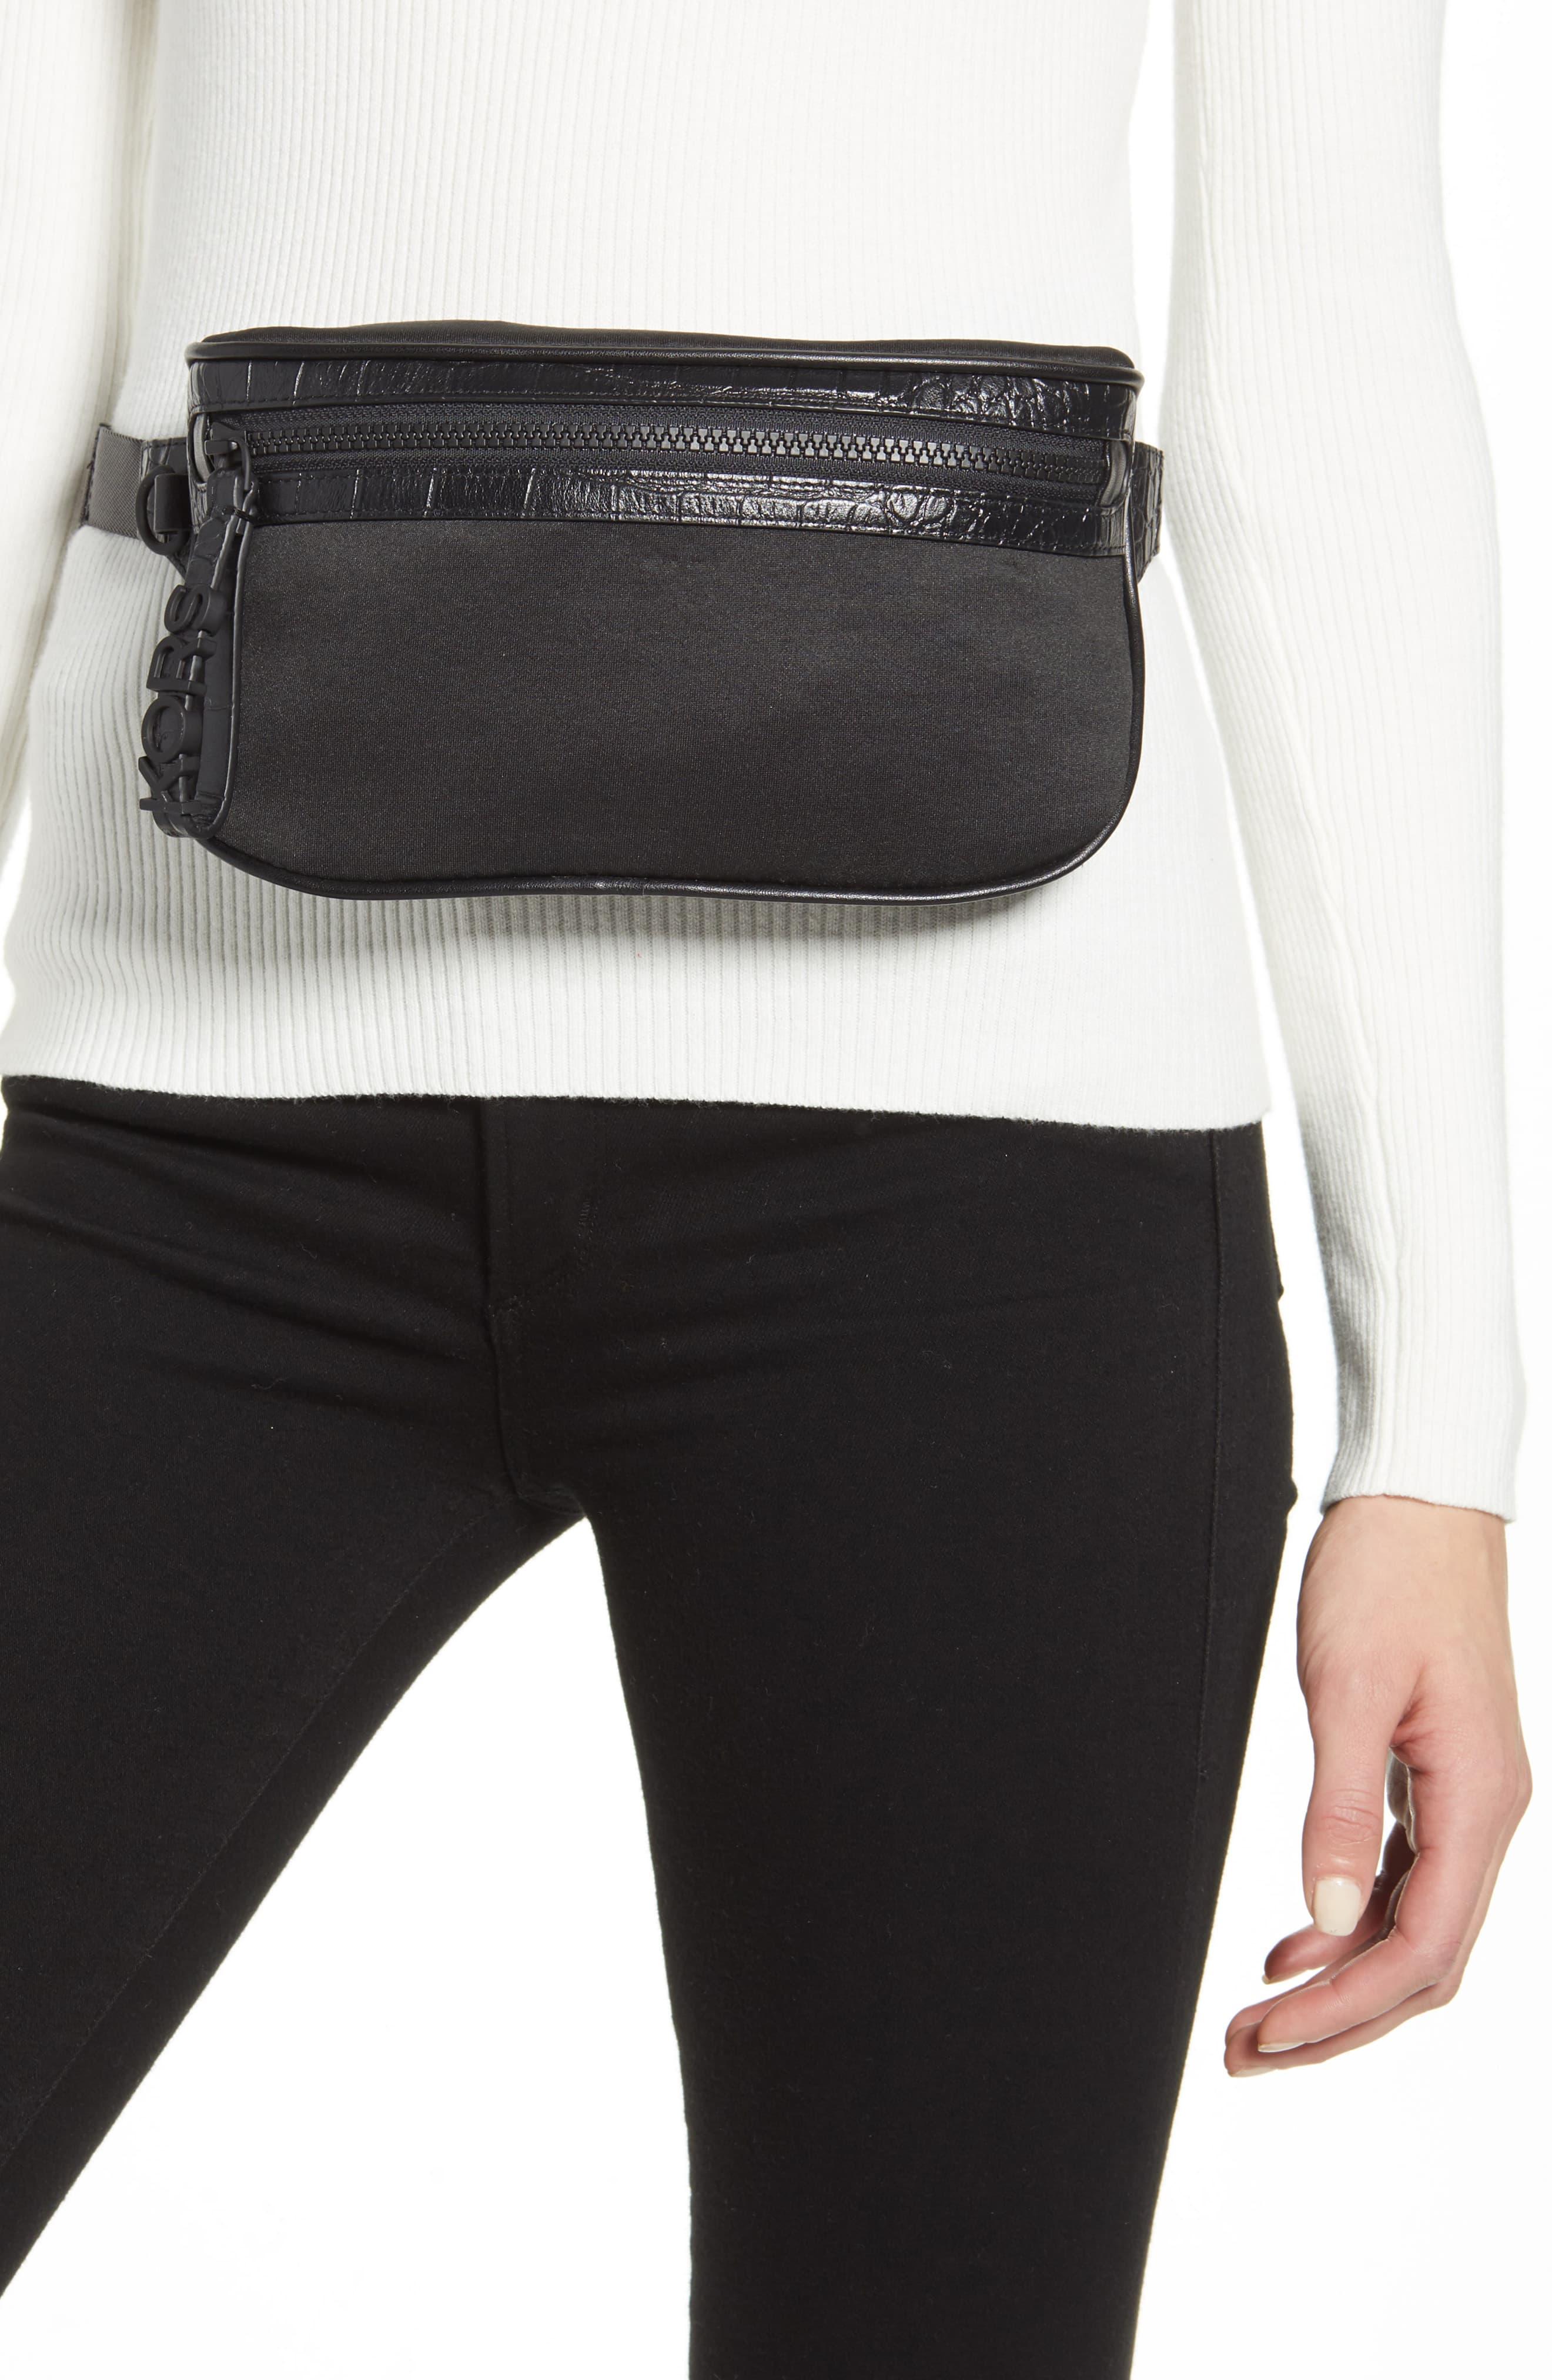 Michael Kors Leather Belt Bag in Black - Lyst